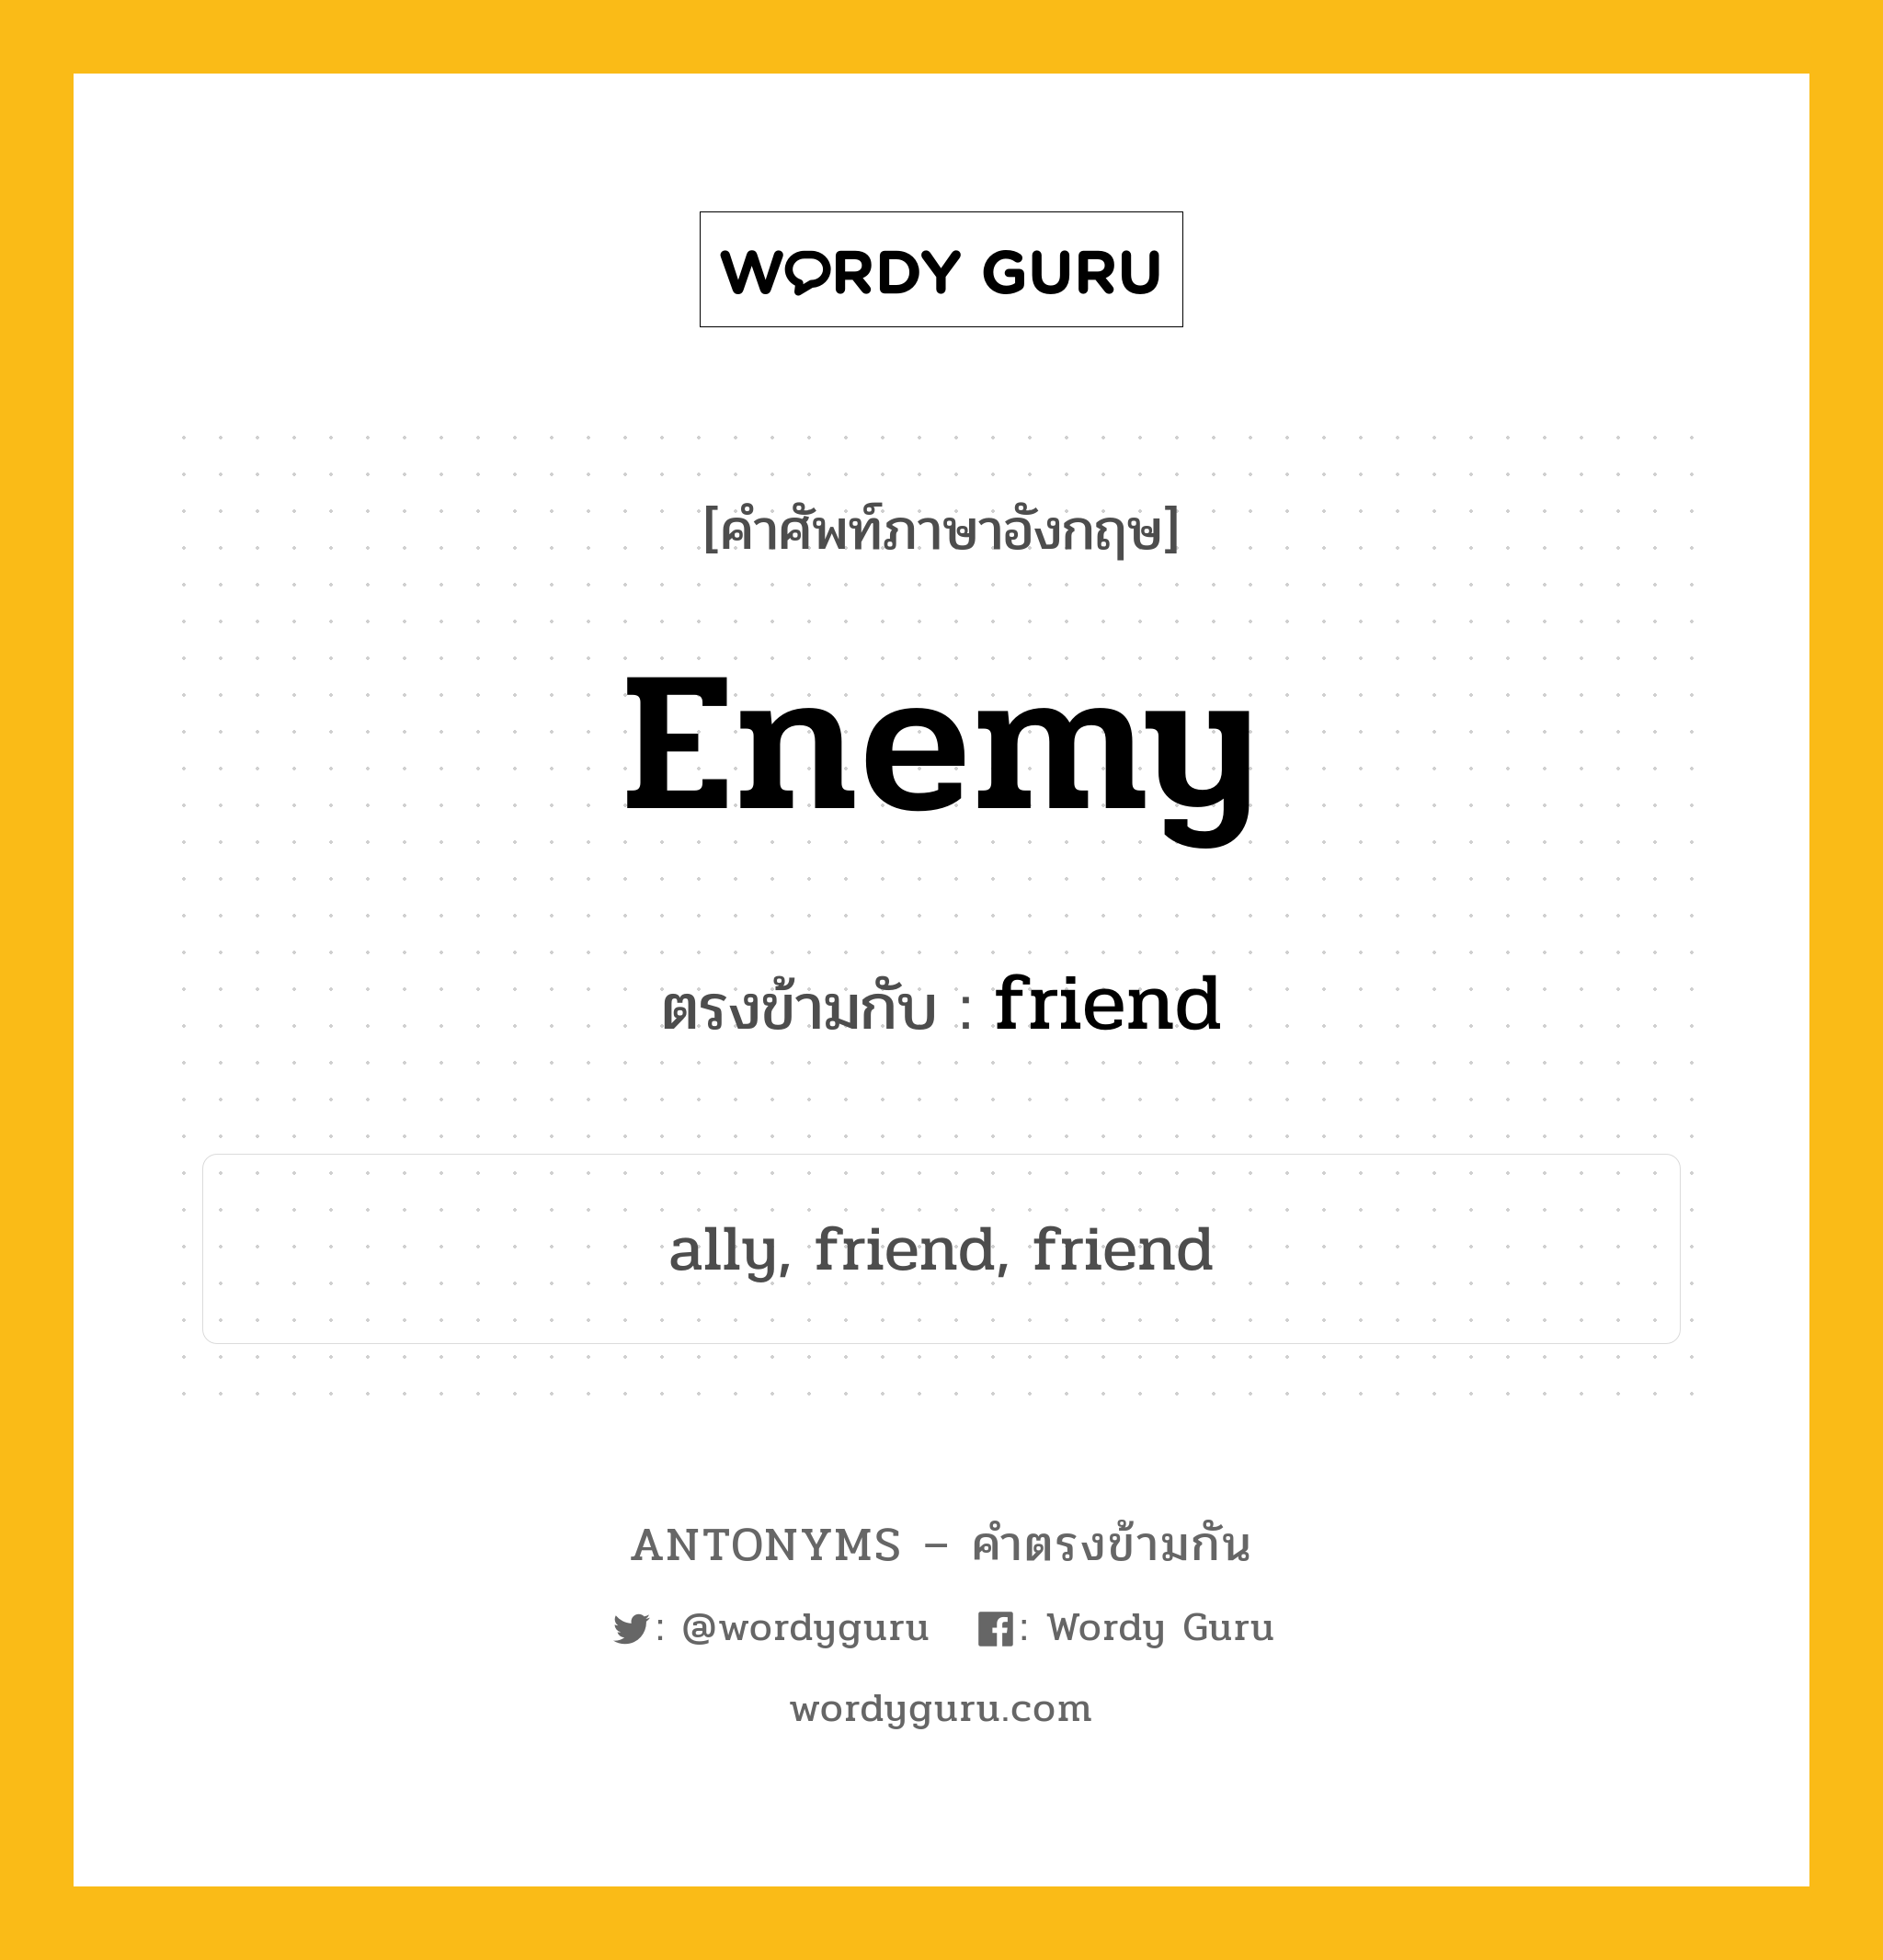 enemy เป็นคำตรงข้ามกับคำไหนบ้าง?, คำศัพท์ภาษาอังกฤษ enemy ตรงข้ามกับ friend หมวด friend